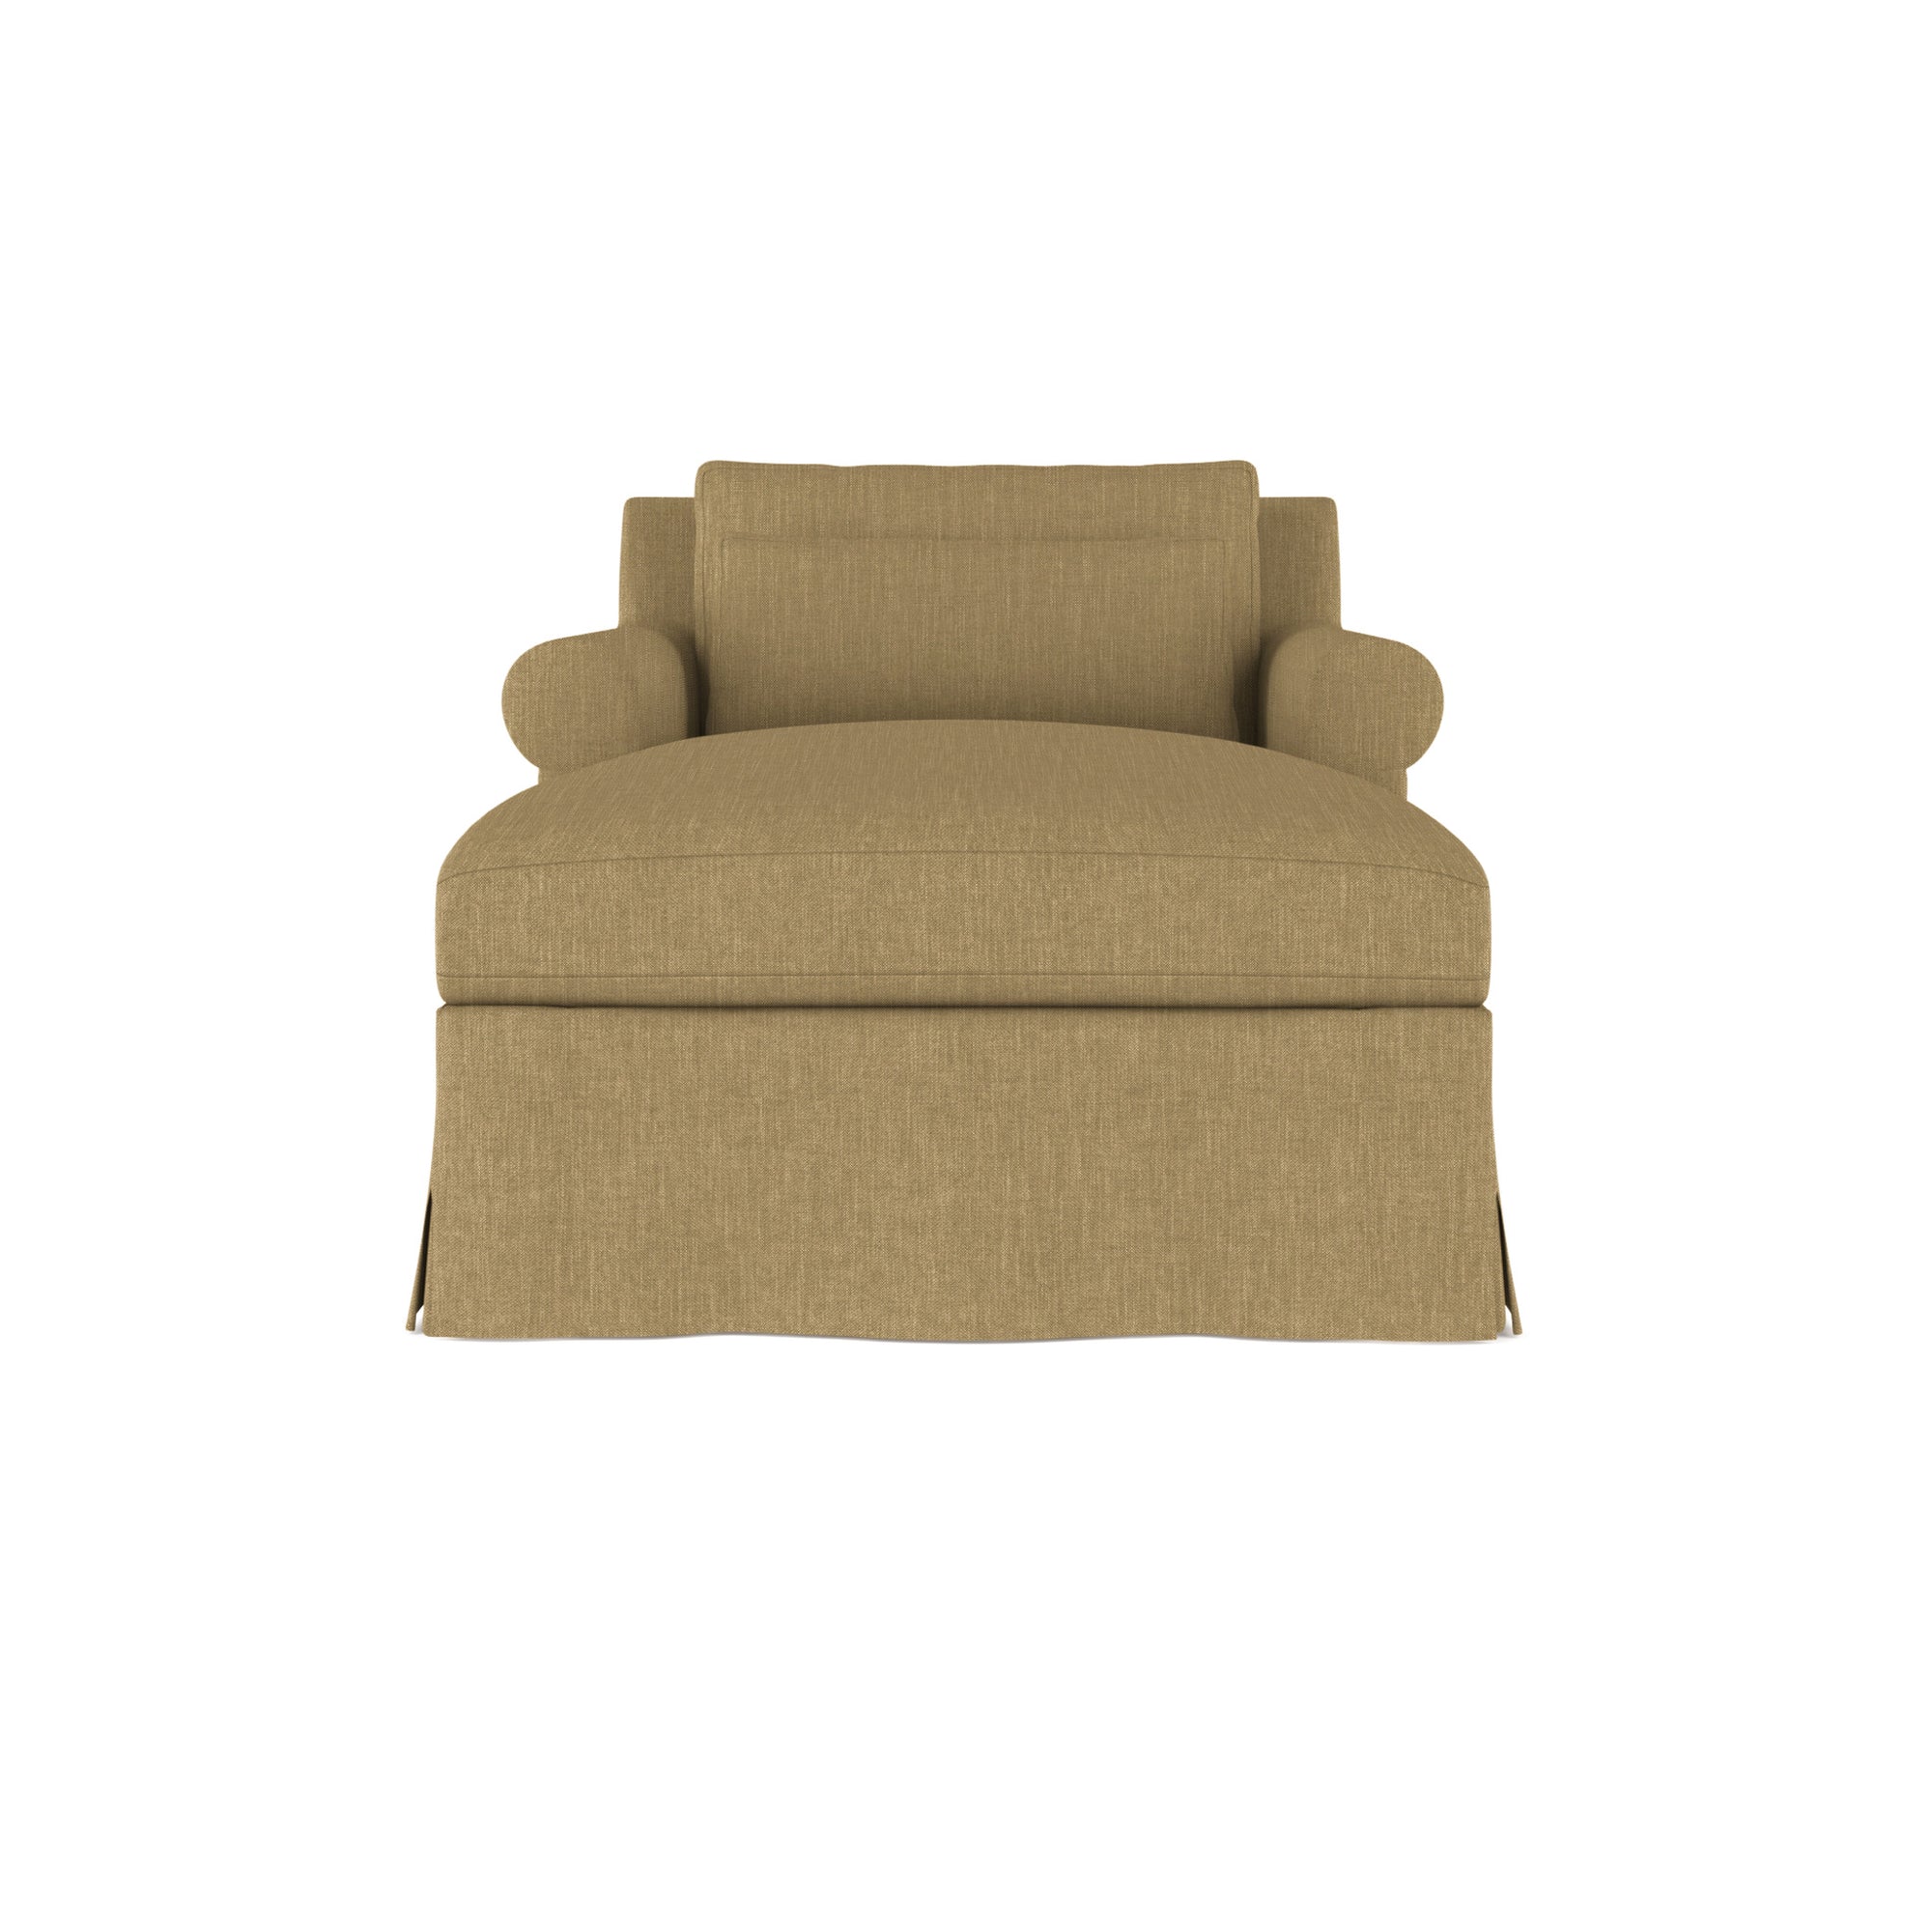 Ludlow Chaise - Marzipan Box Weave Linen